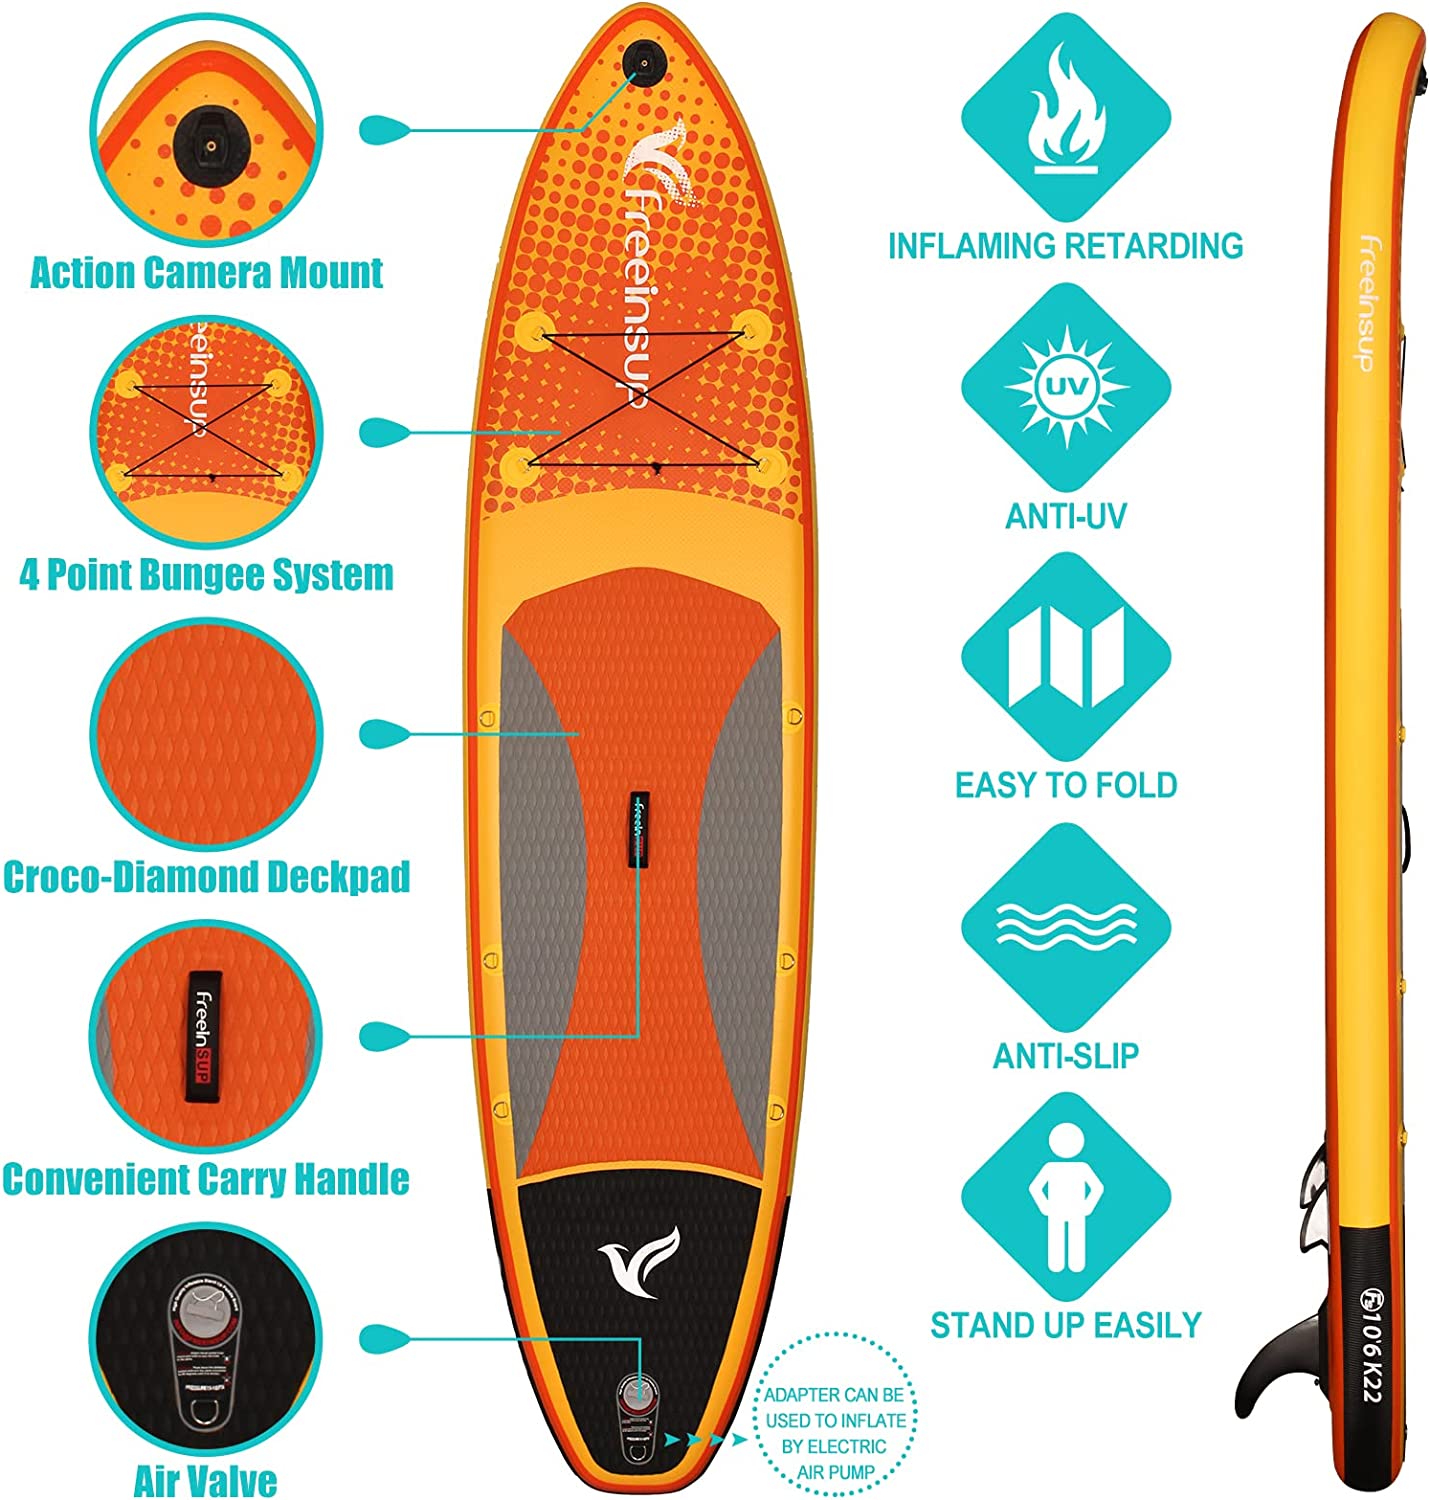 Freein 10'6 Inflatable Kayak SUP 2023